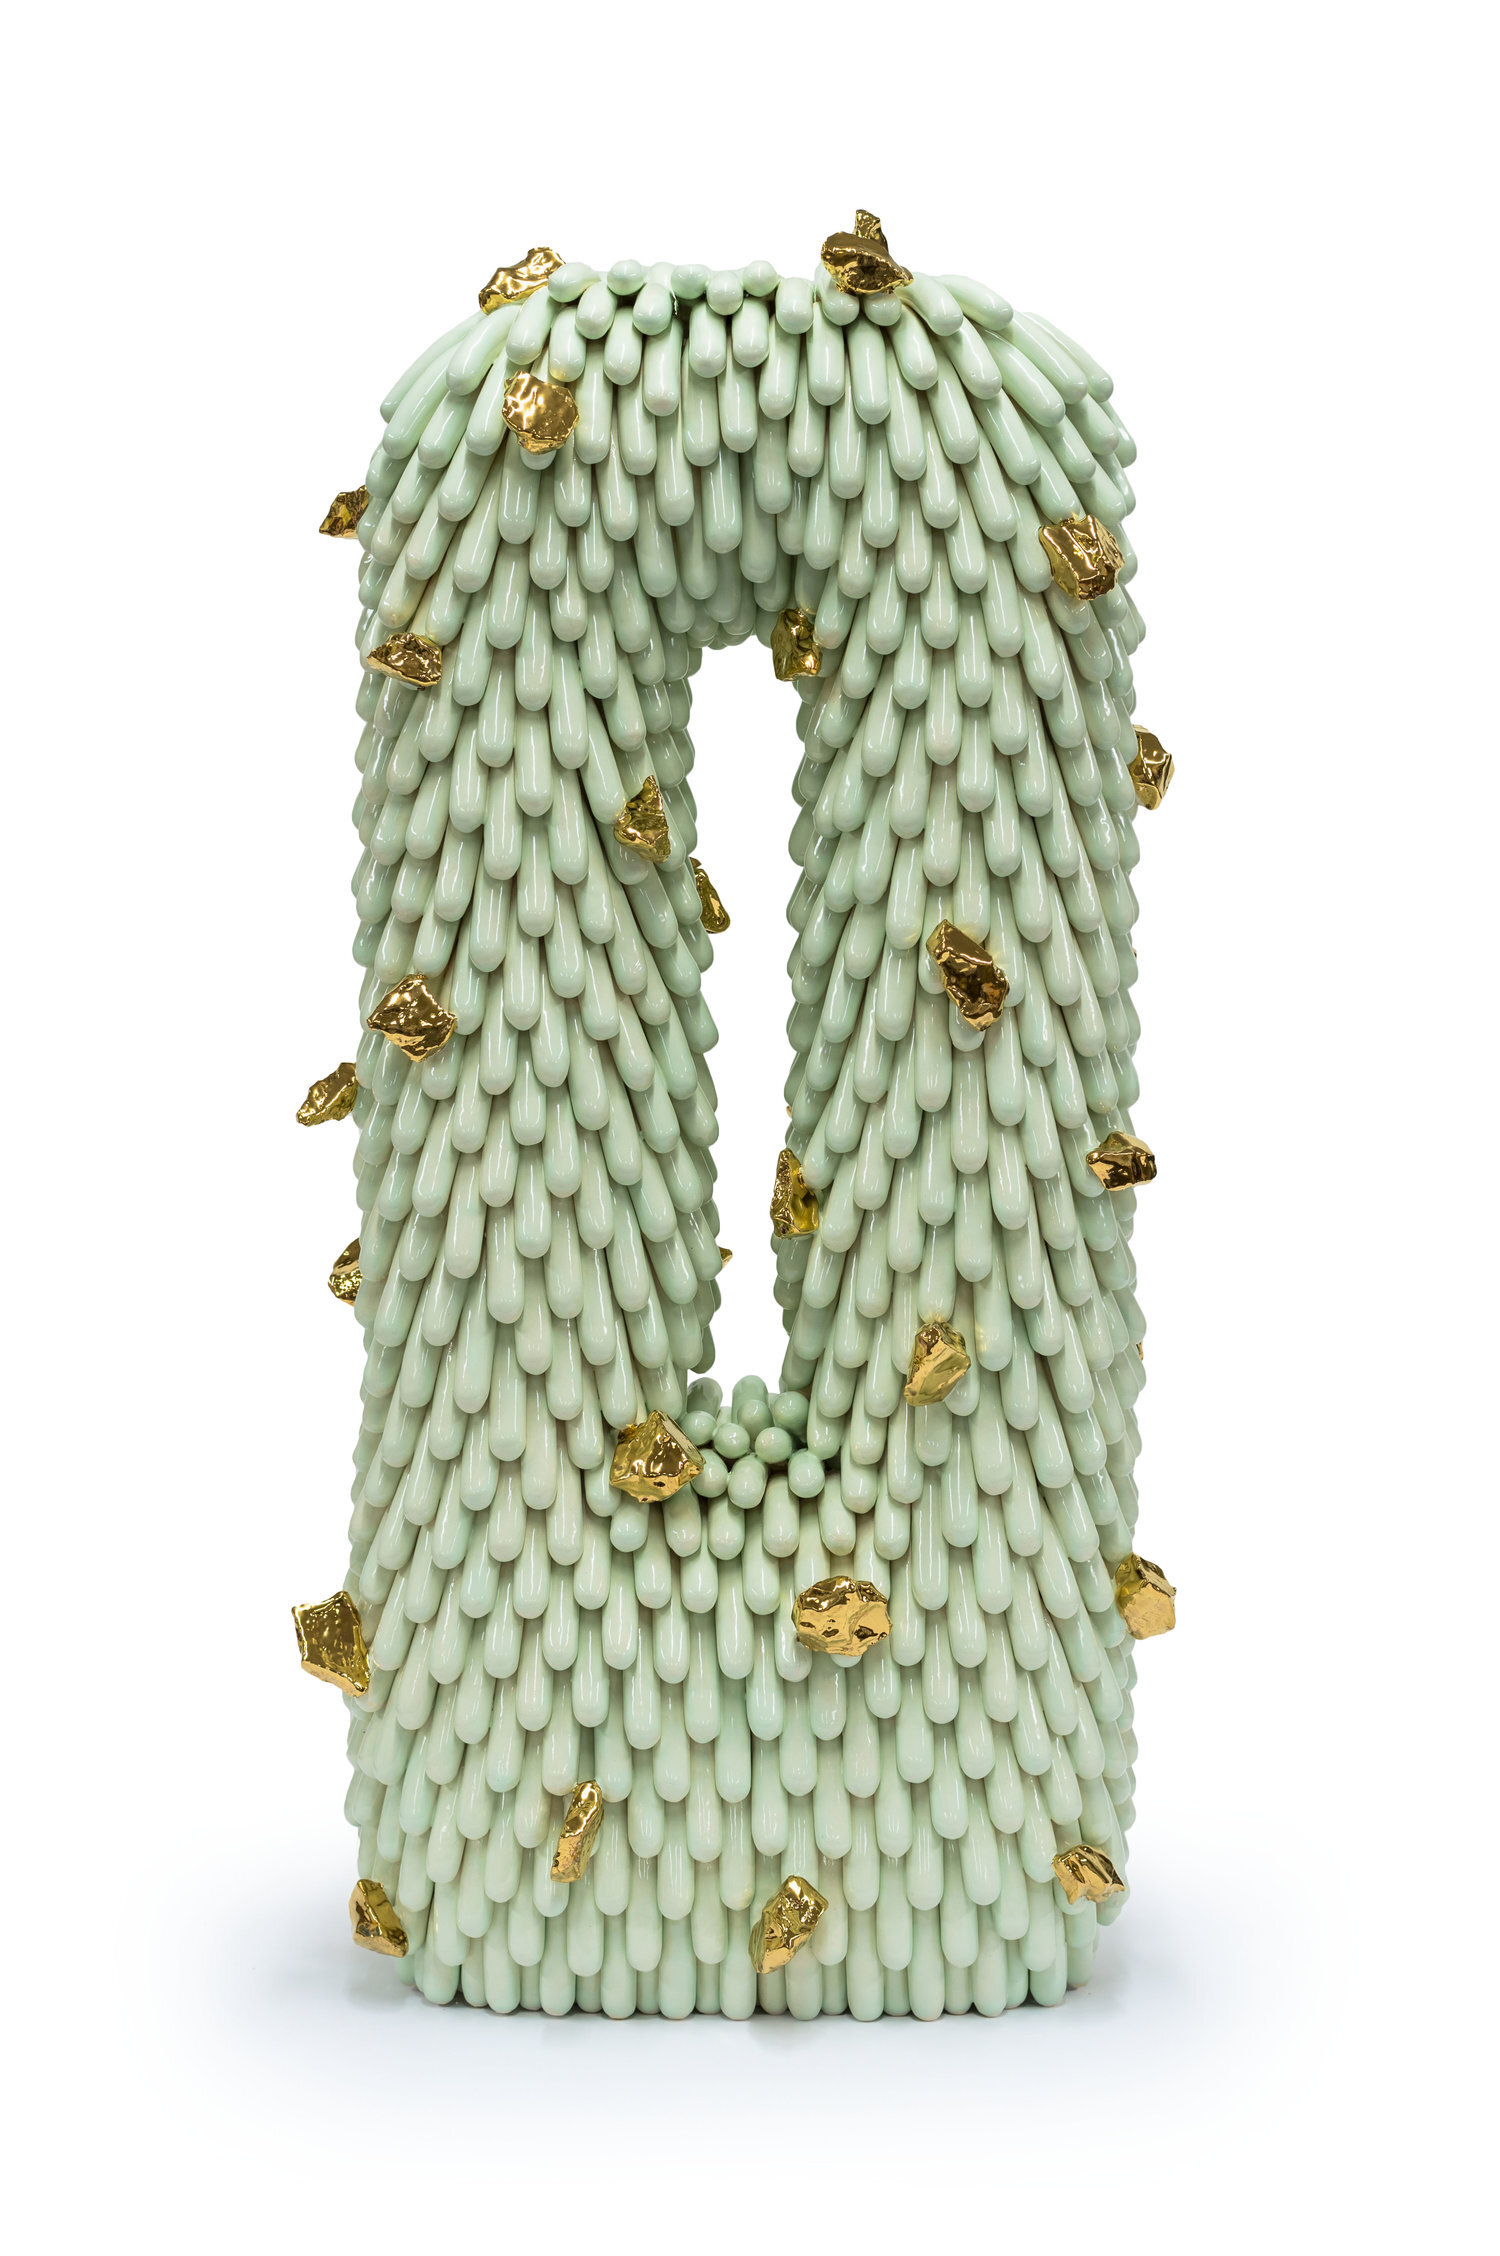    Jade Dust Furry with Gold Rocks  , 21.5” x 10.5” x 6.25”, earthenware 